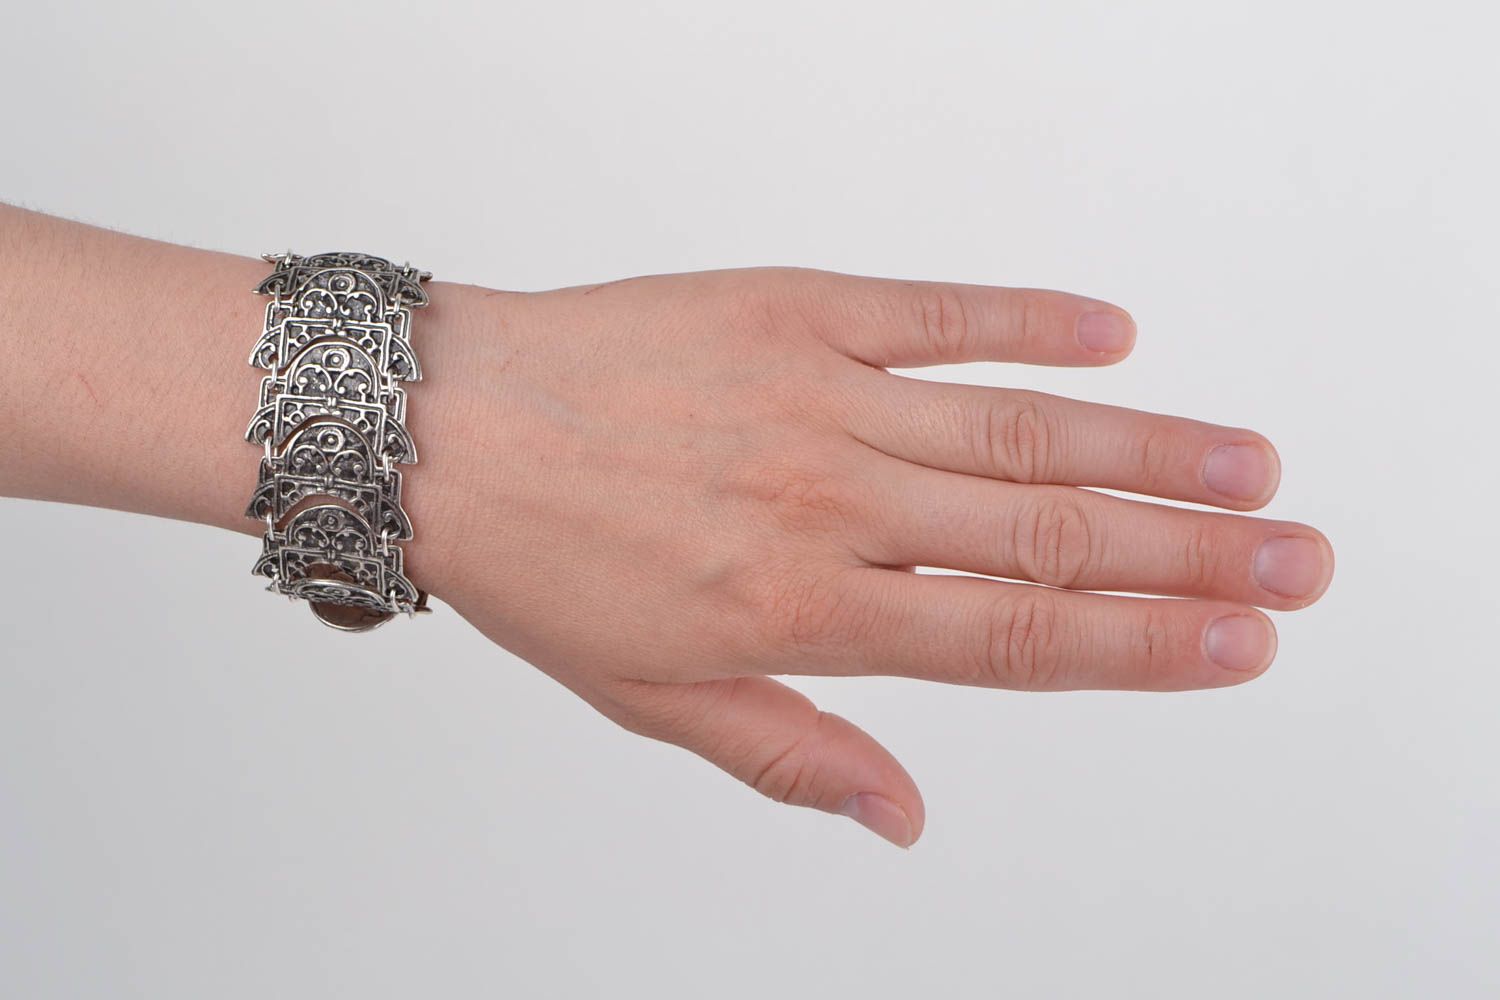 Handmade Metall Armband in Kokillenguss Technik für Frauen mit Kettenglied foto 1